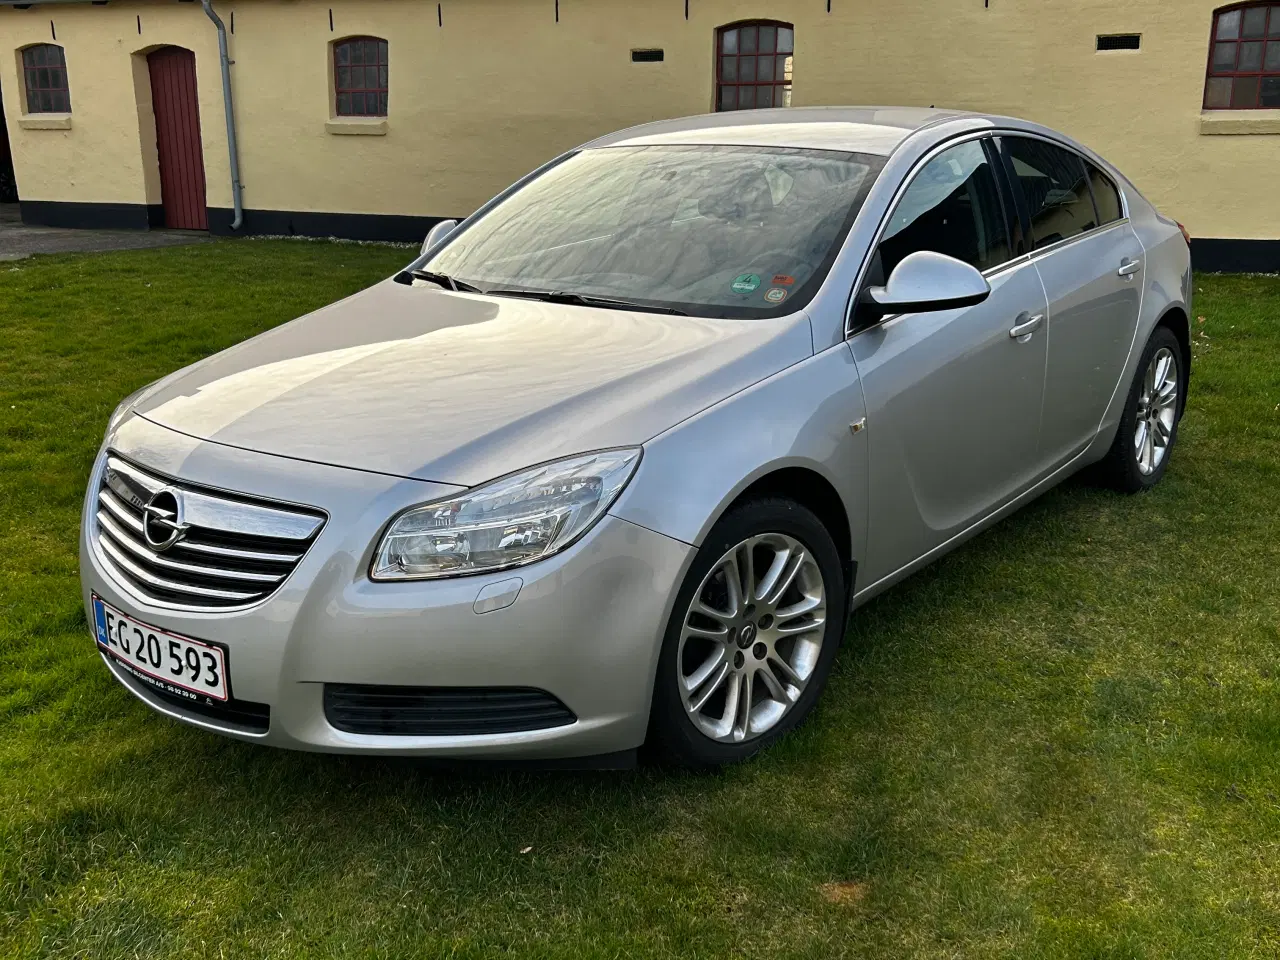 Billede 2 - Opel insignia 1.8, 140 HK.